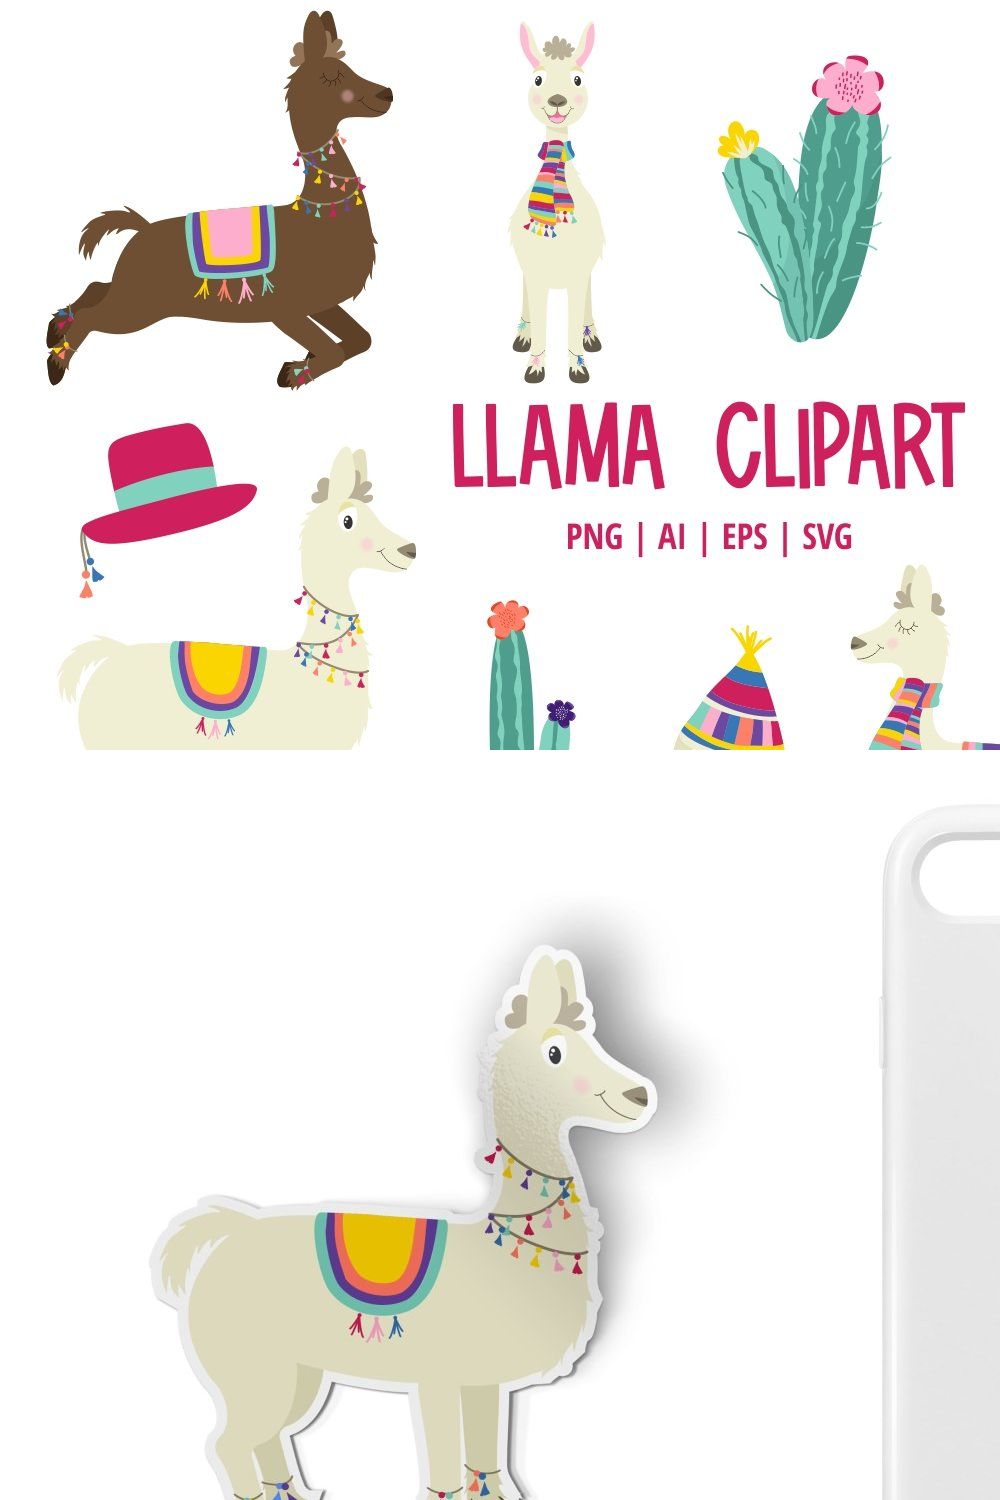 Llama Clipart pinterest preview image.